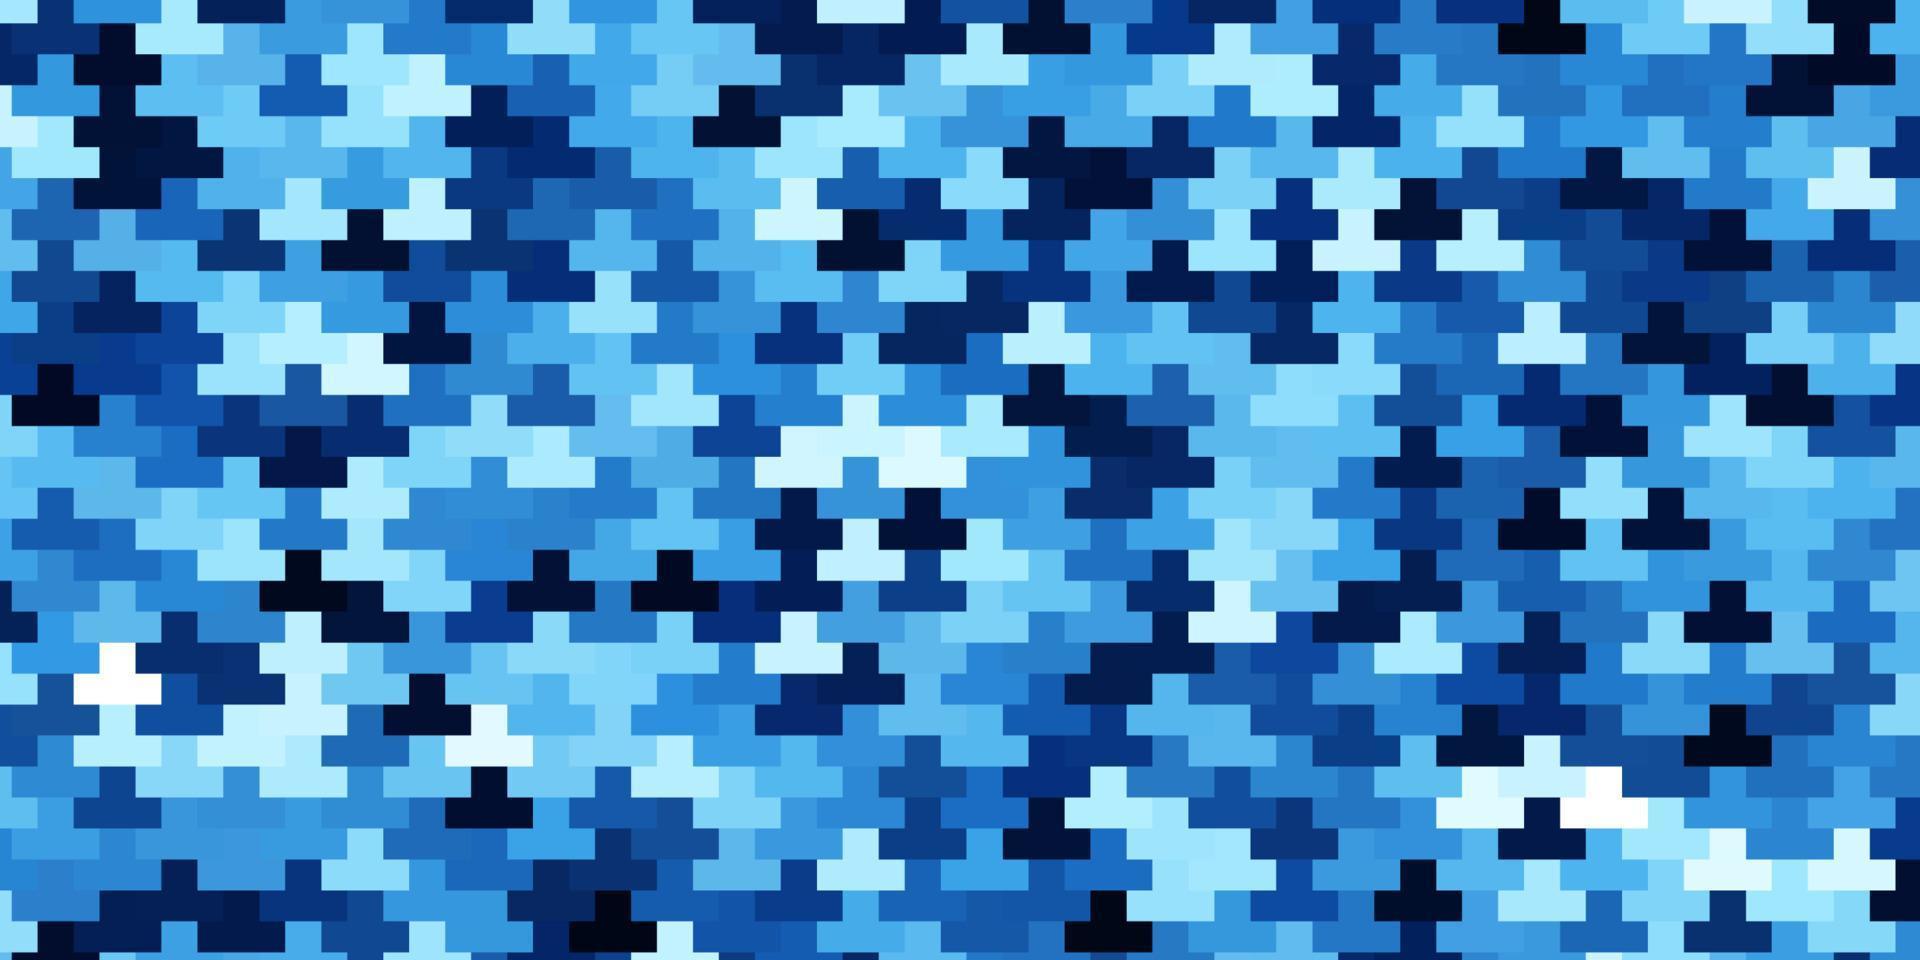 textura vector azul claro em estilo retangular.